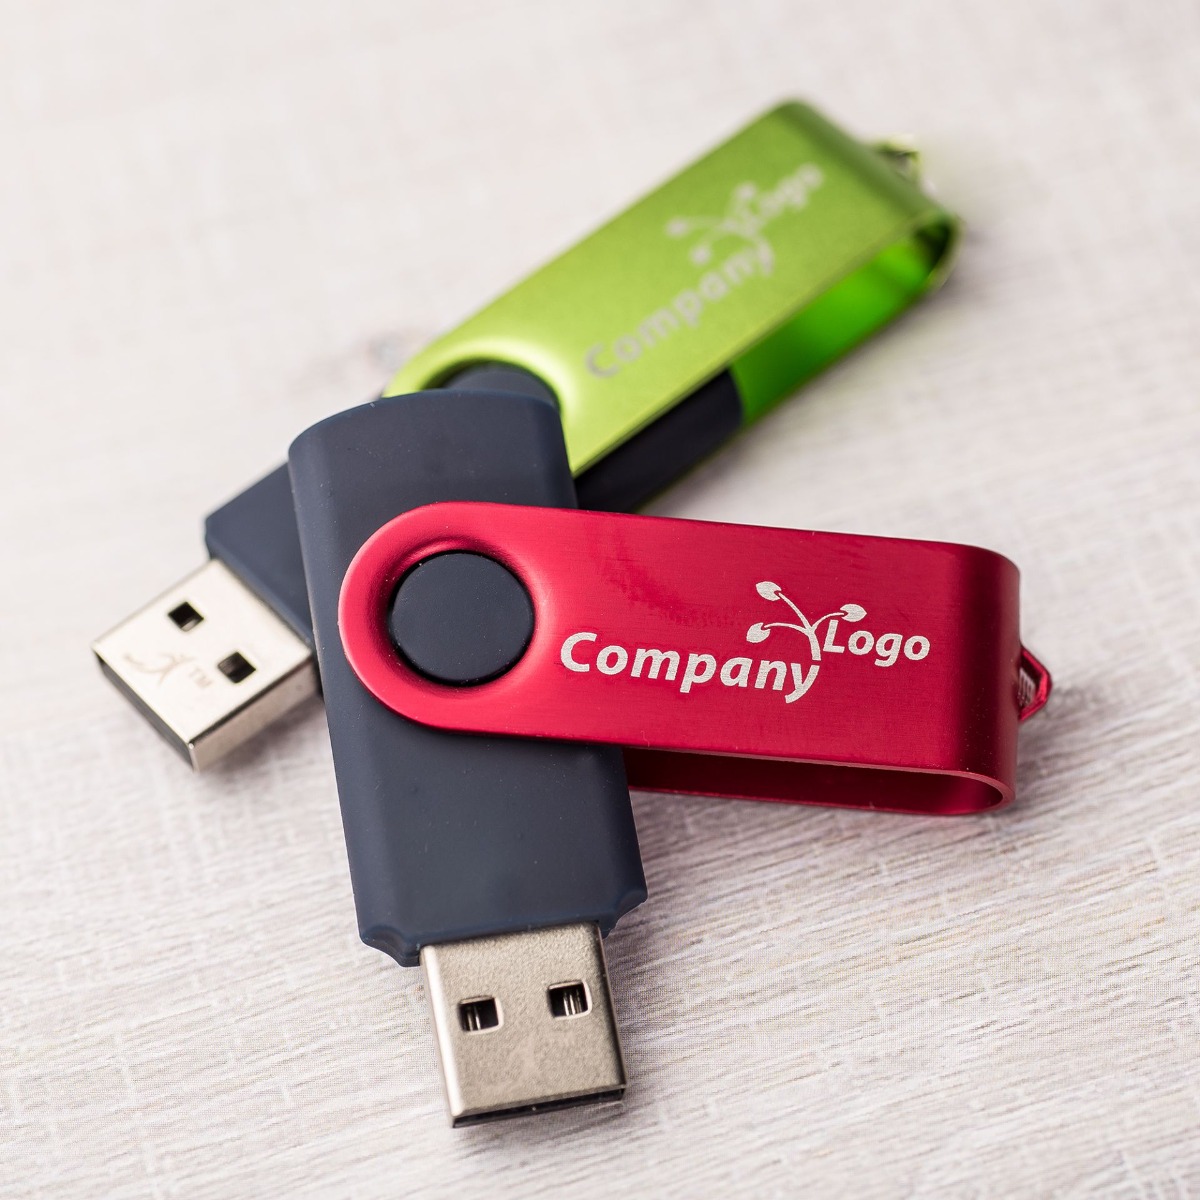 USB-Stick Expert 3.0 in verschiedenen Farben